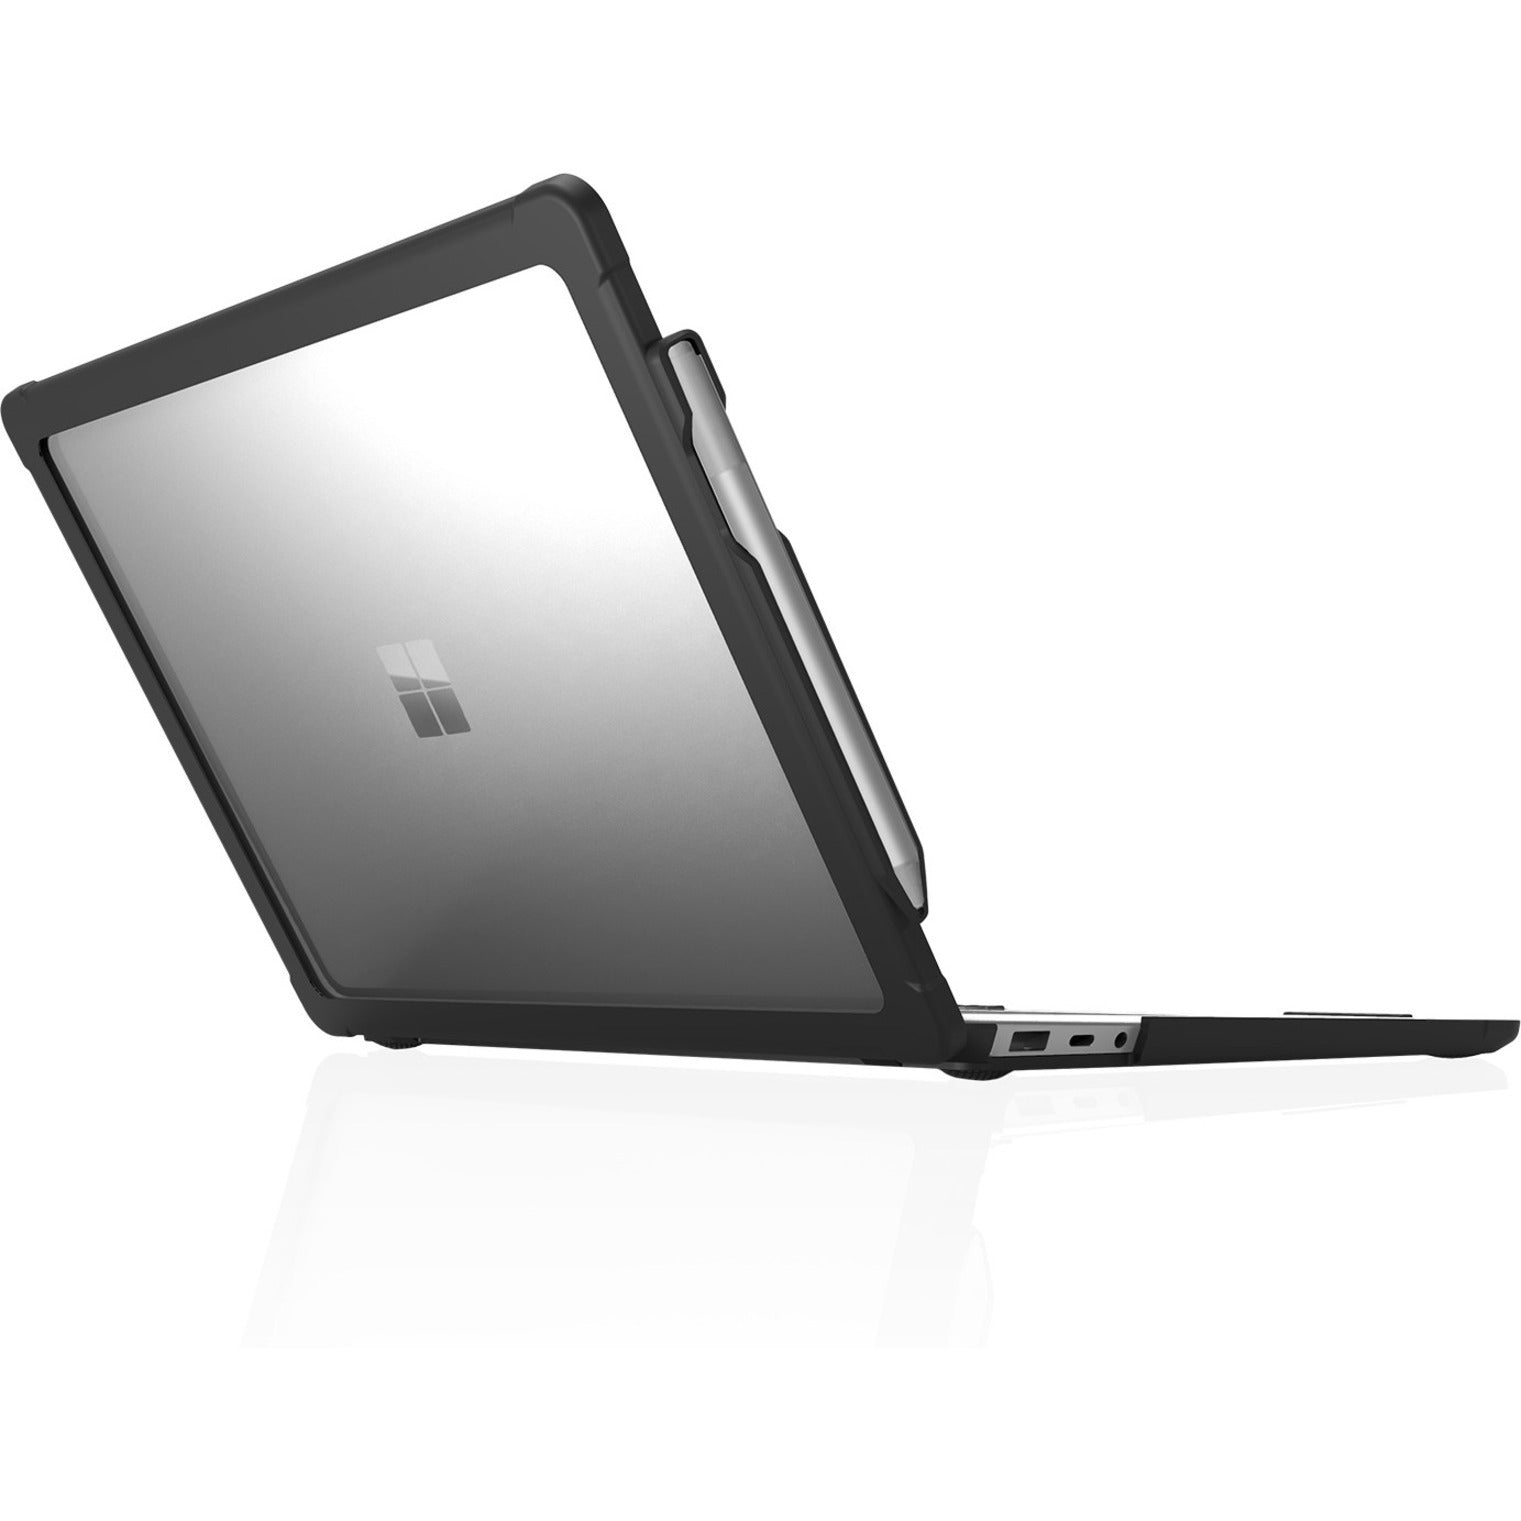 STM Goods STM-122-262M-01 DUX for Surface Laptop 3, Black Transparent Case, 3 Year Warranty